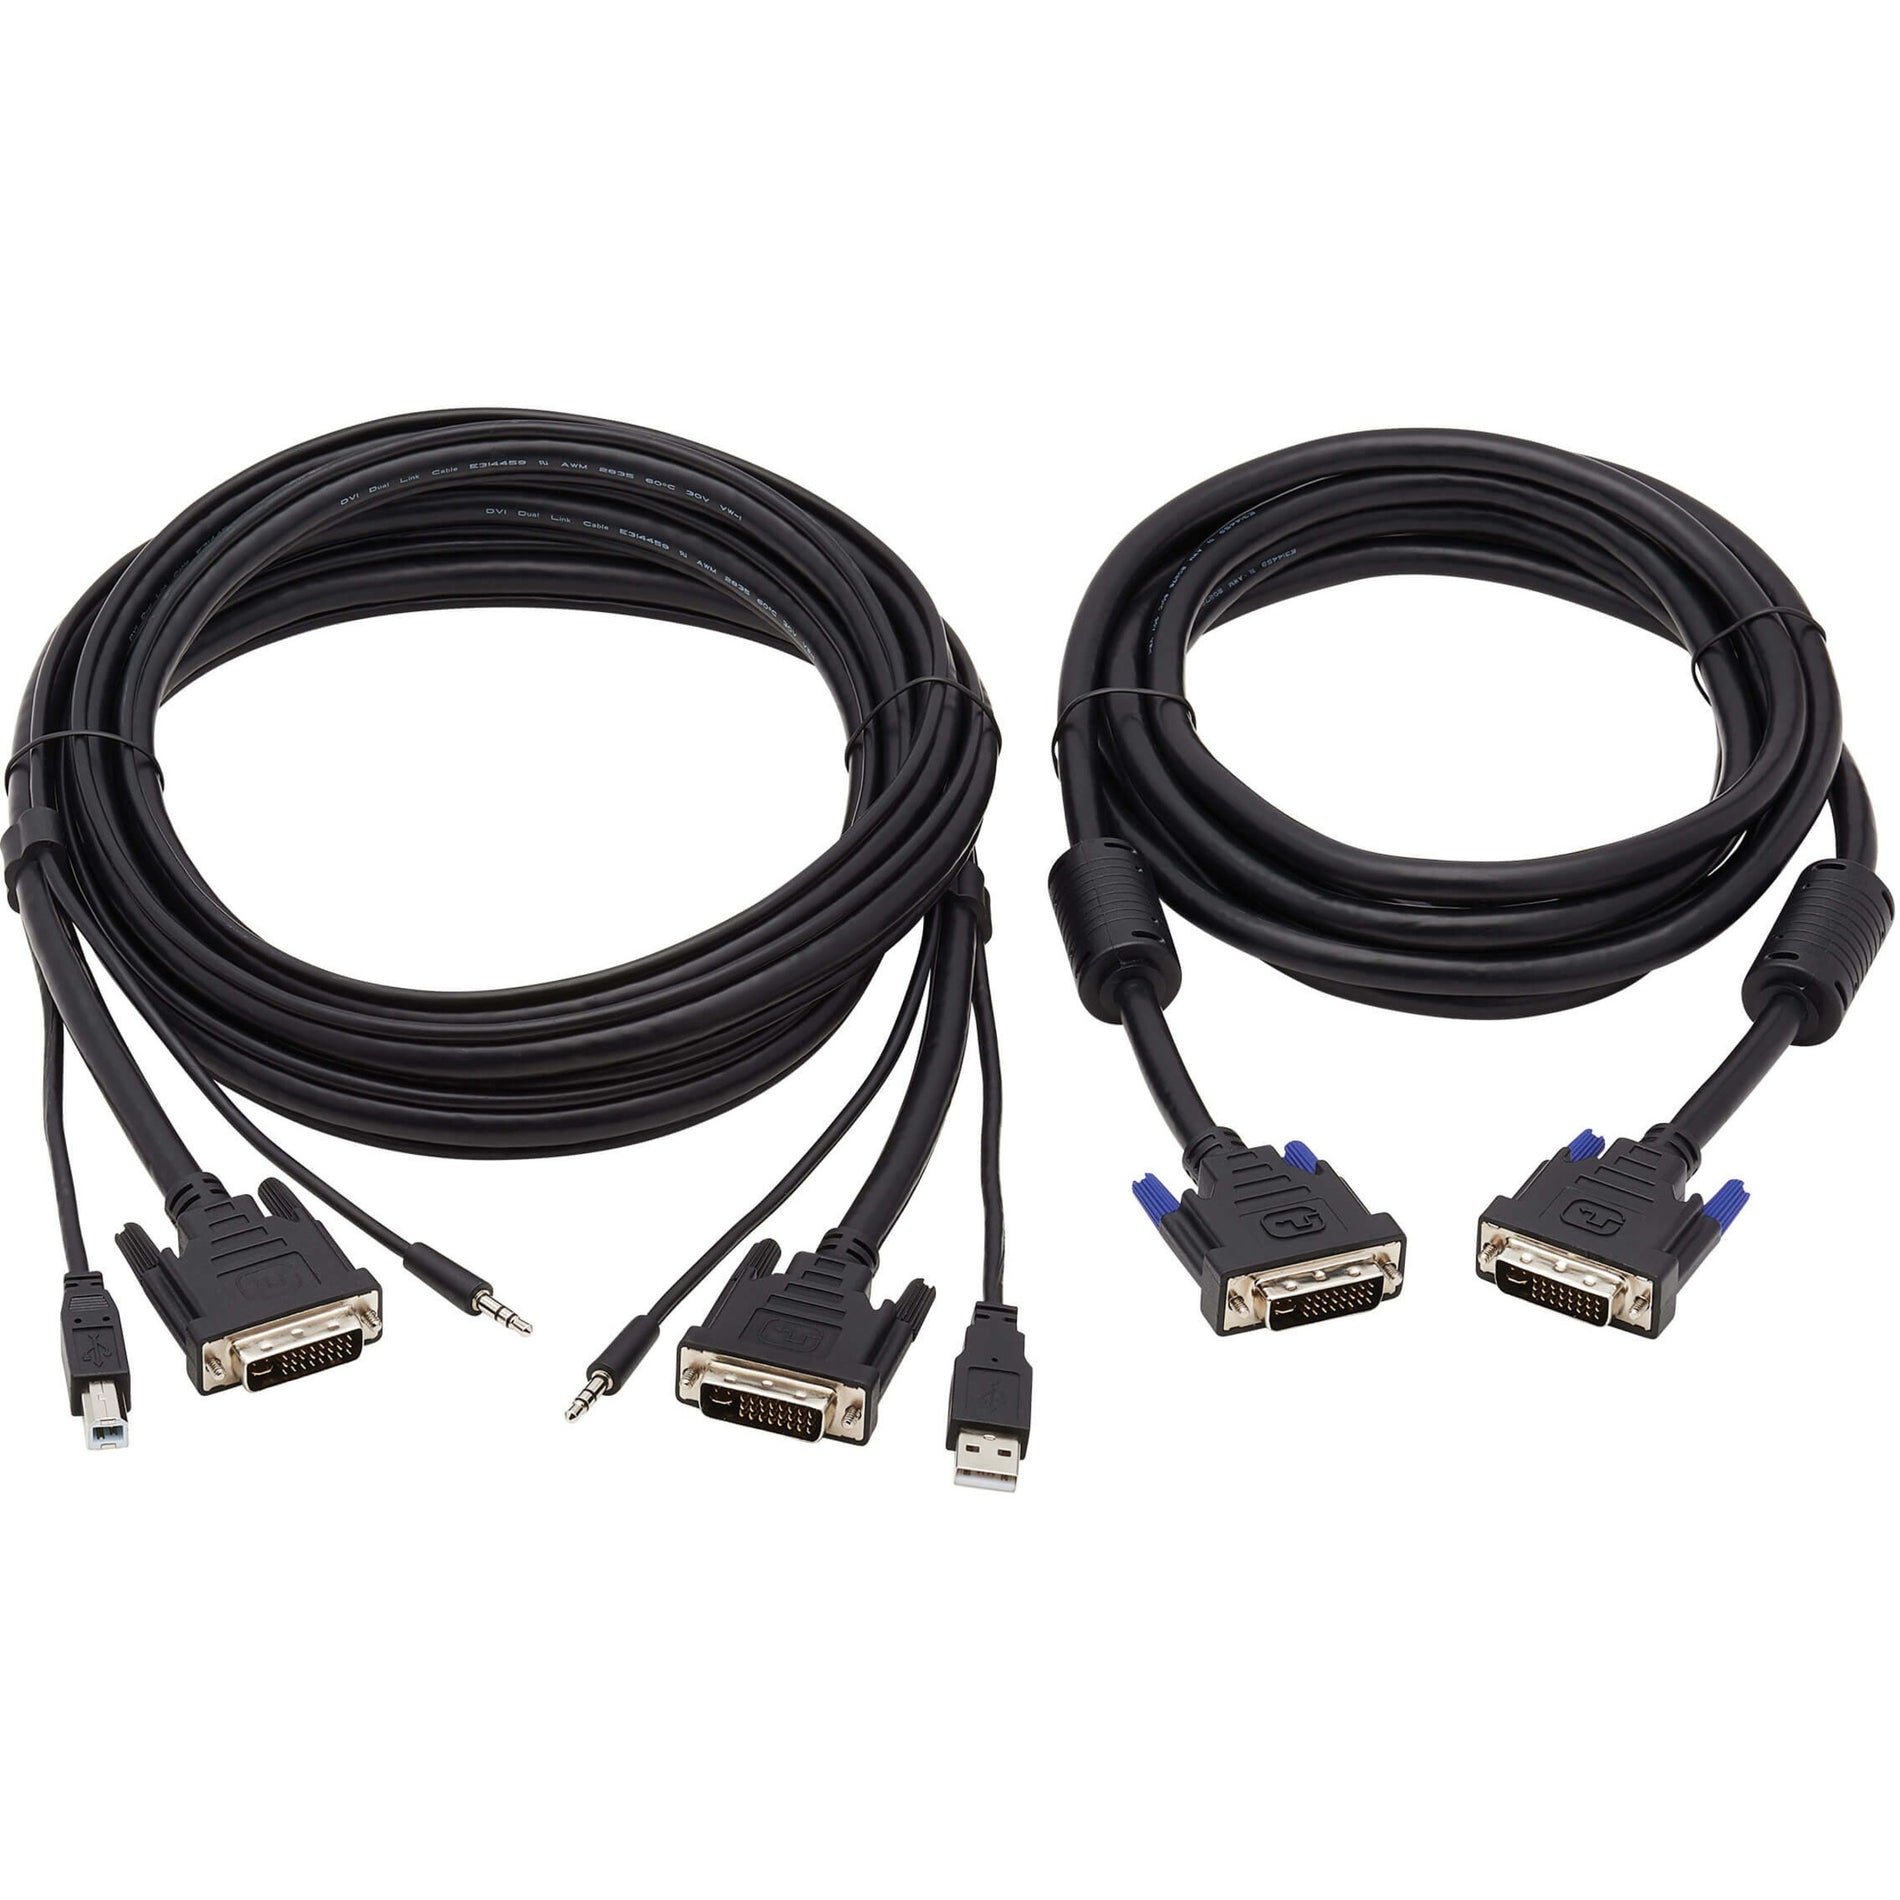 Tripp Lite P784-006-DV KVM ケーブル、6 フィート、プラグアンドプレイ、480 Mbit/s、2560 × 1600、DVI-I (デュアルリンク) デジタルビデオ、USB 2.0 タイプ A/B、ステレオオーディオ、ライフタイム保証。ブランド名：トリップライト。